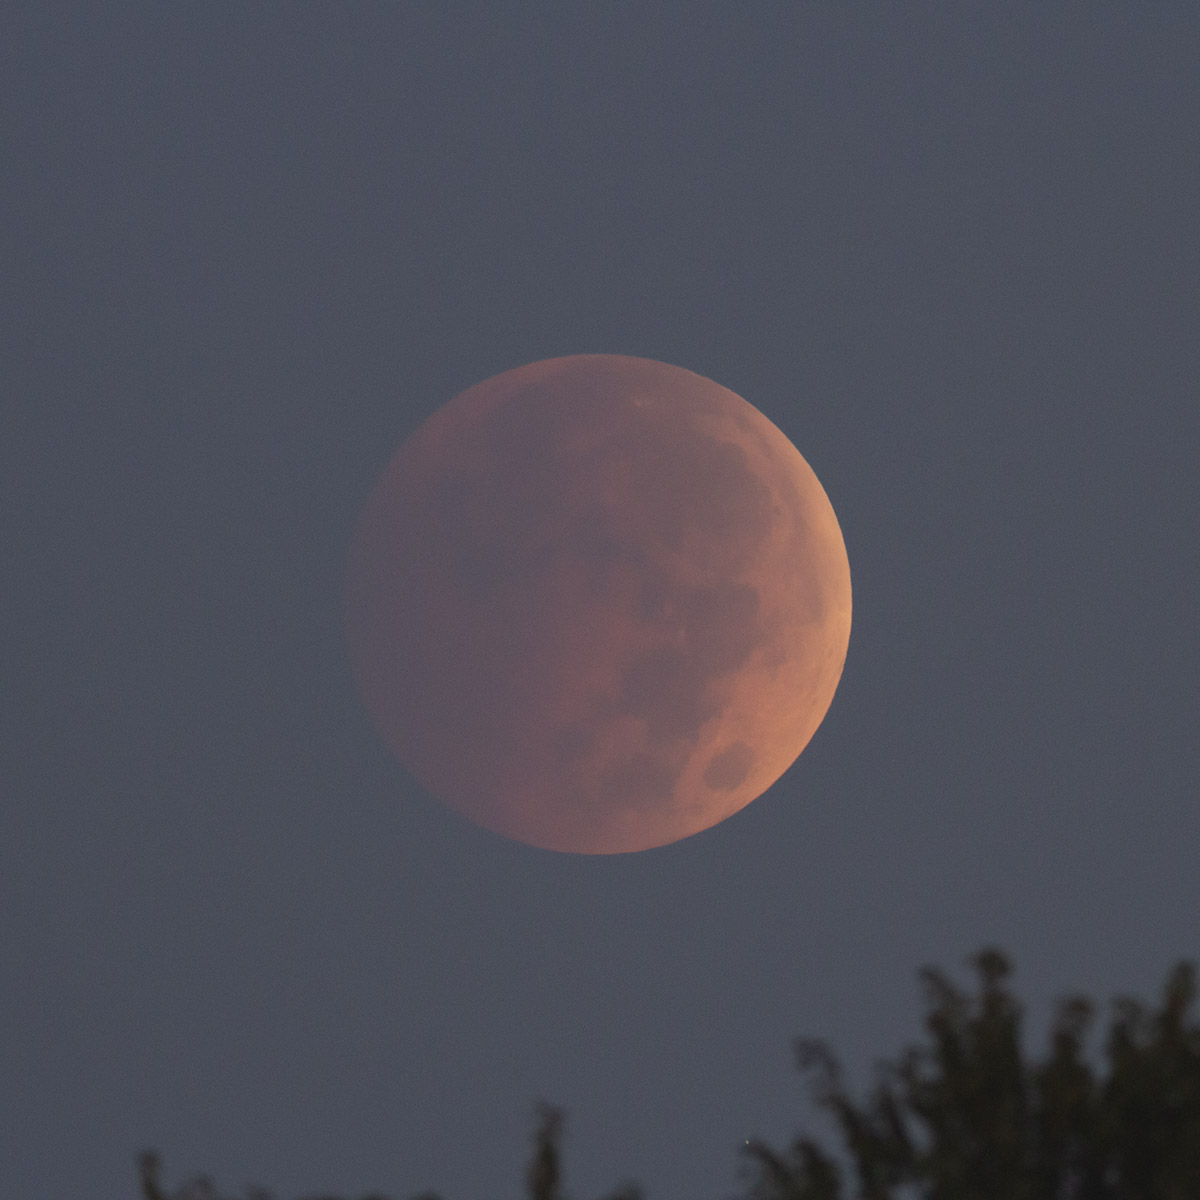 foto del eclipse lunar